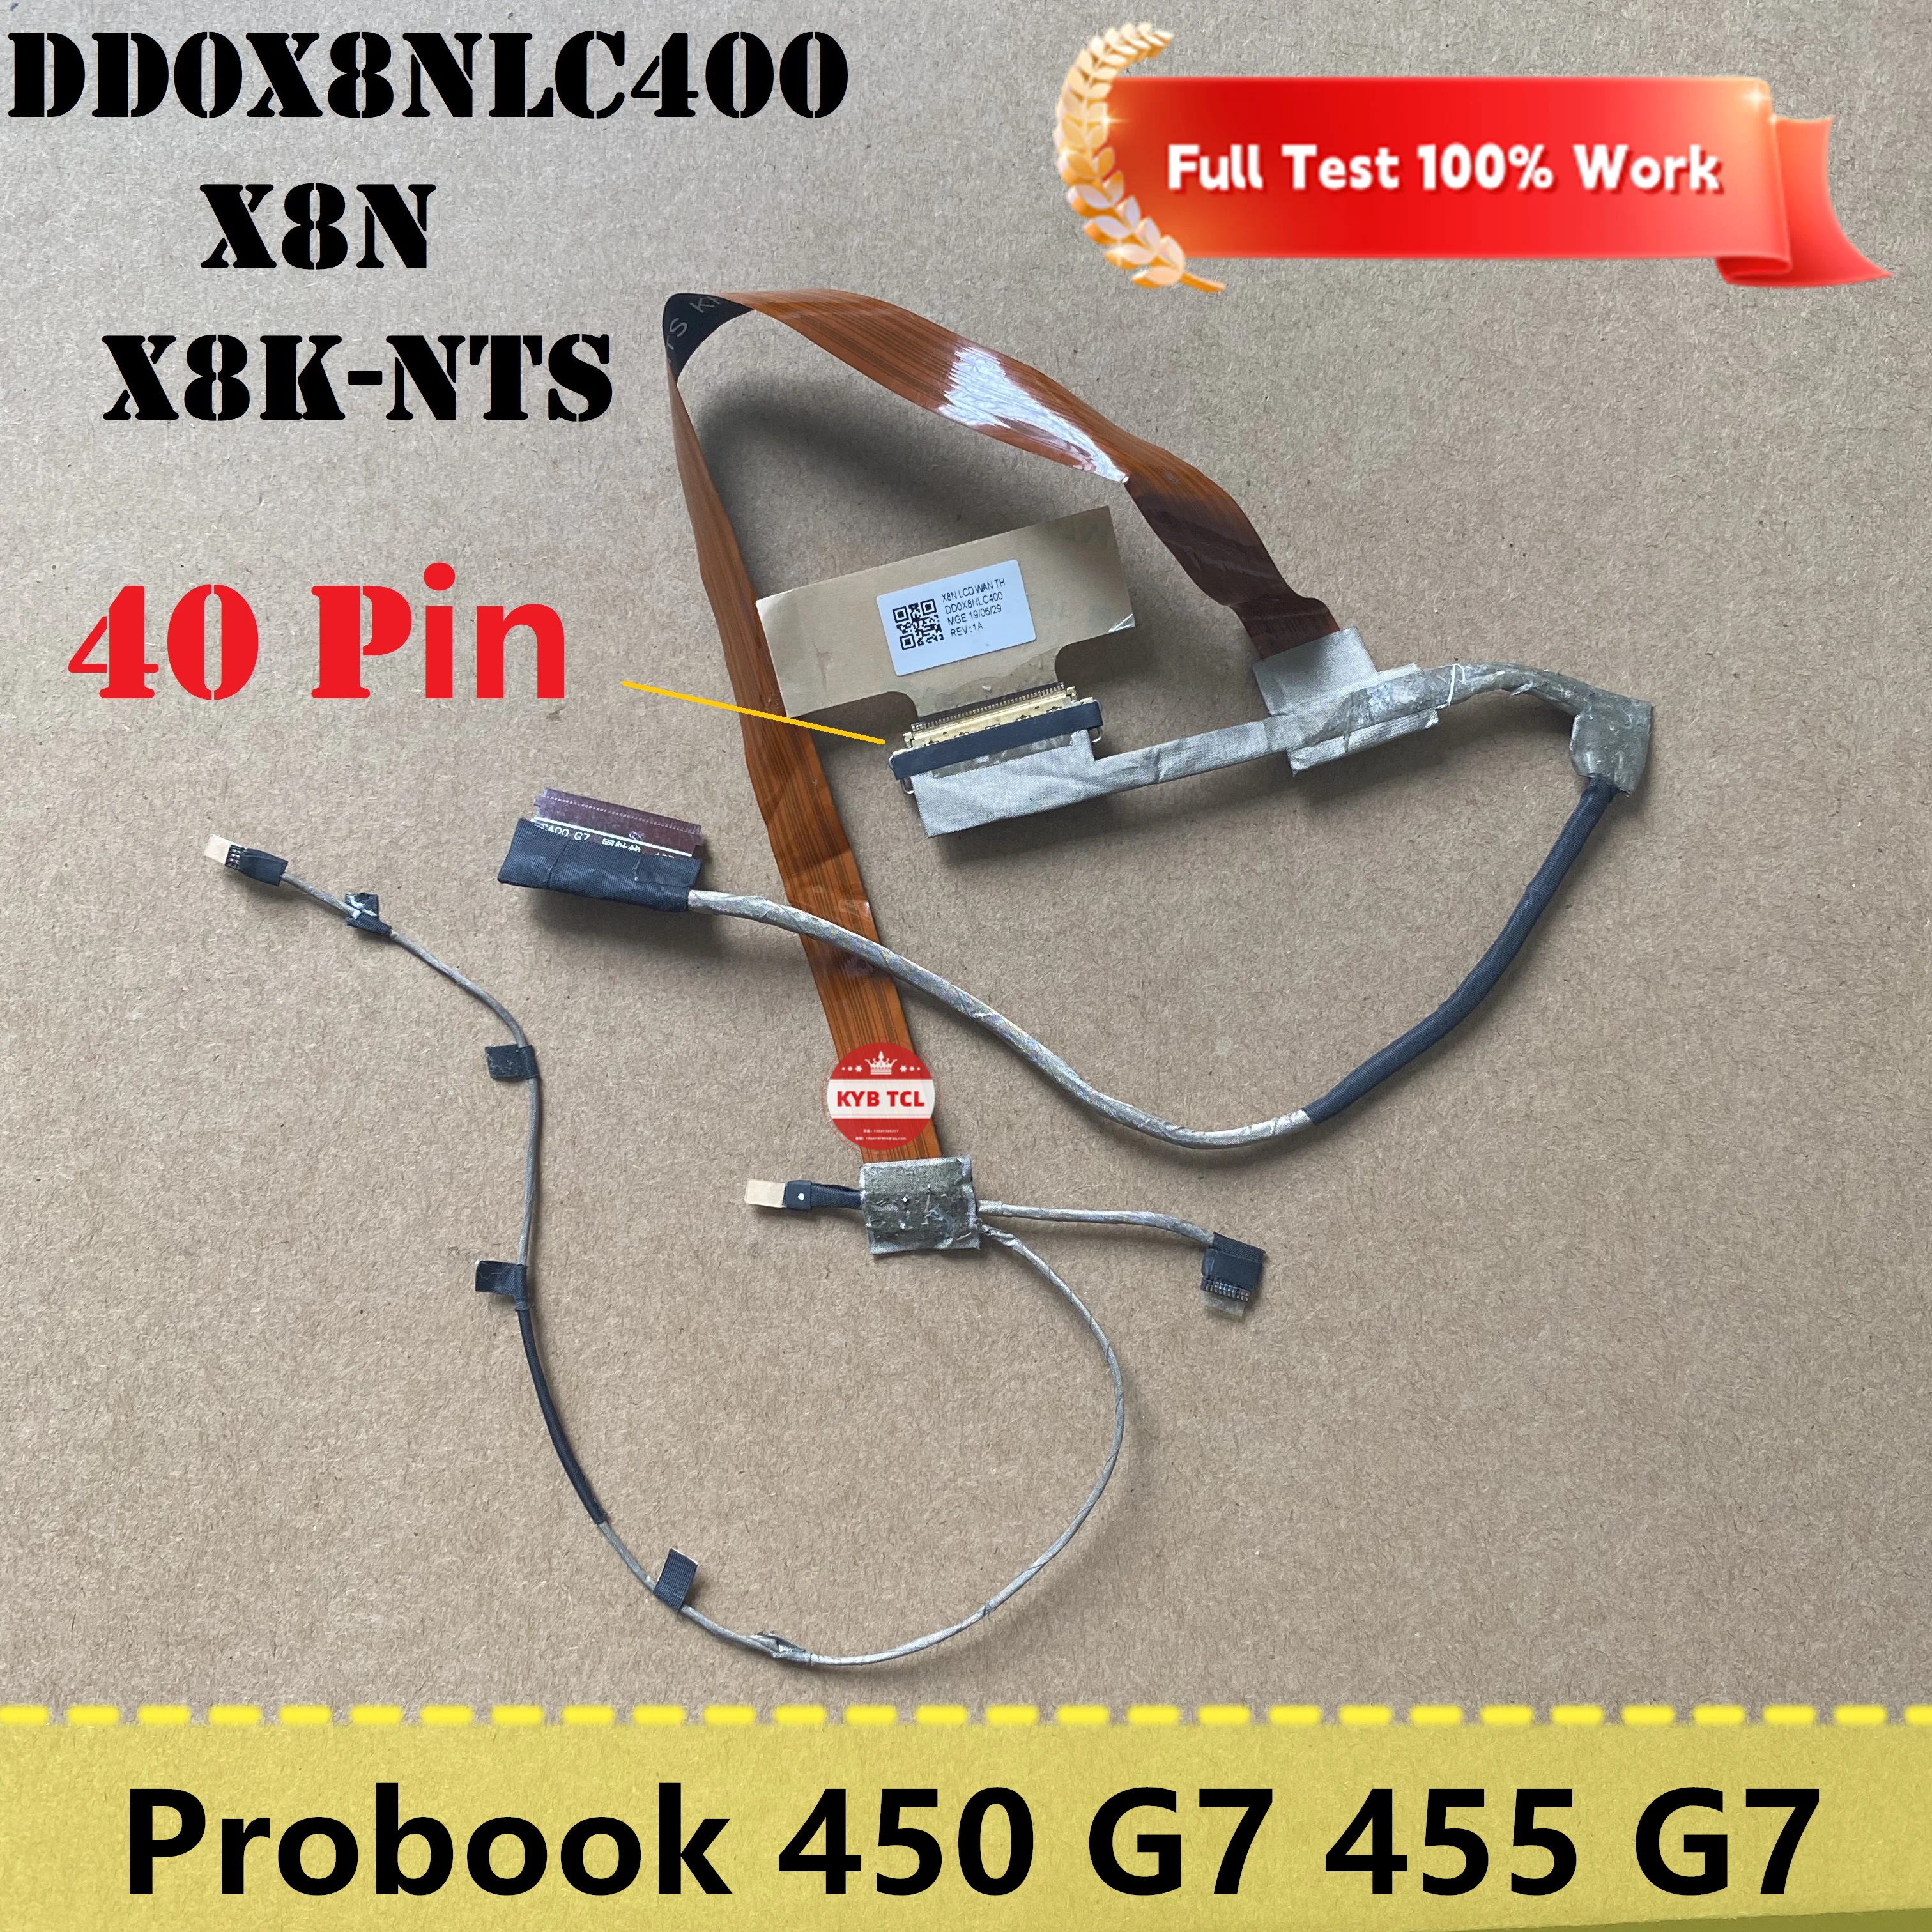 

For HP Probook 450 G7 455 G7 DD0X8NLC400 X8N X8K-NTS 40PIN Genuine Laptop LCD LED Display Ribbon Camera Video Screen Flex Cable